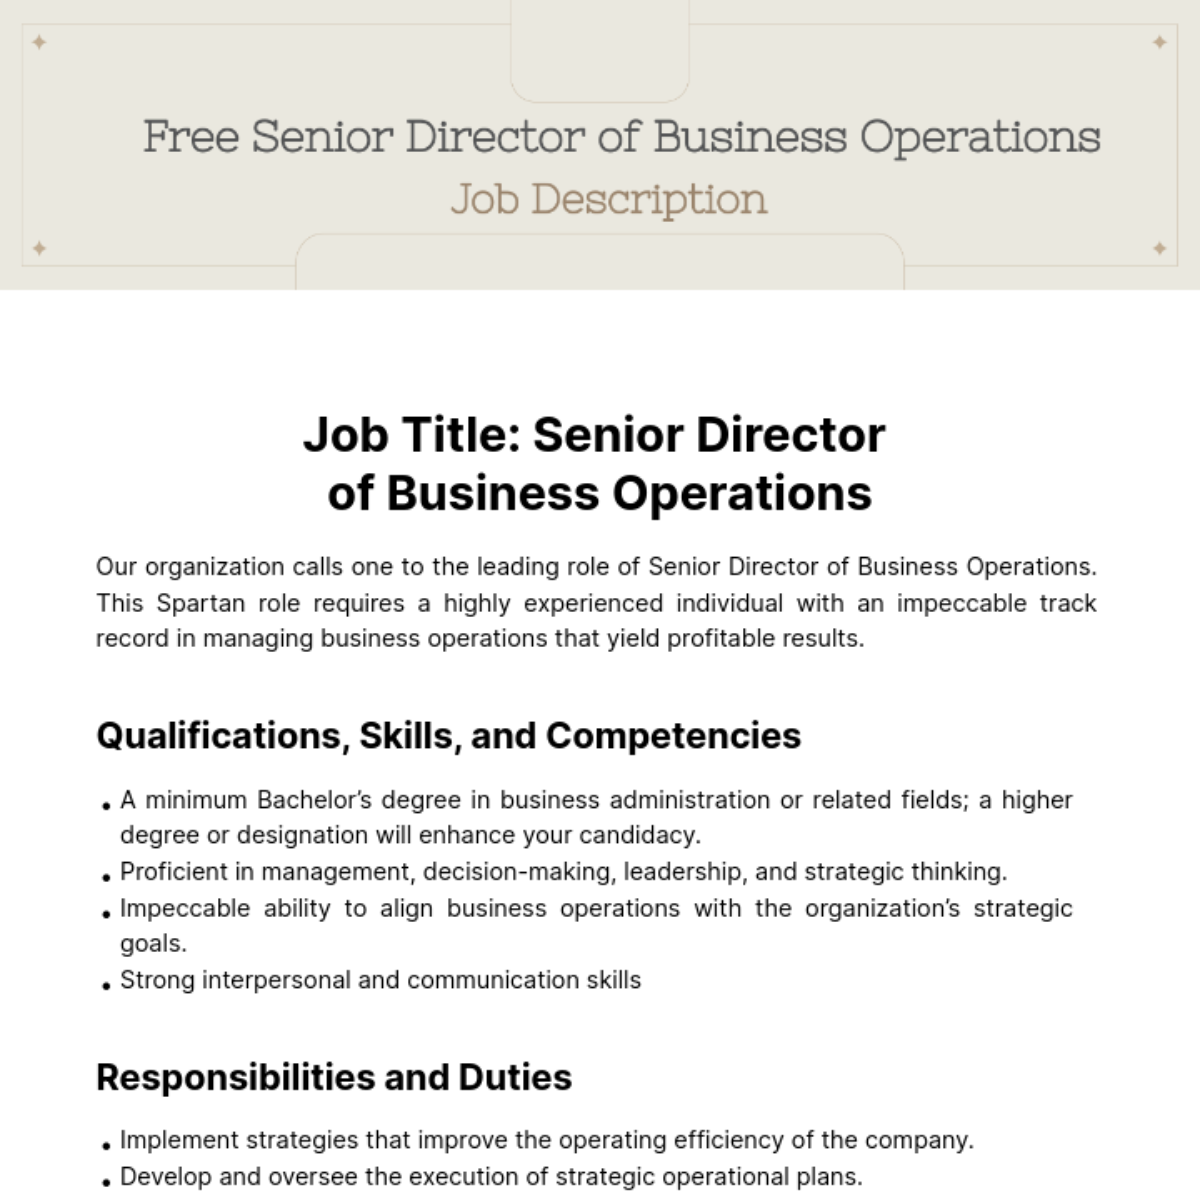 Senior Director of Business Operations Job Description Template